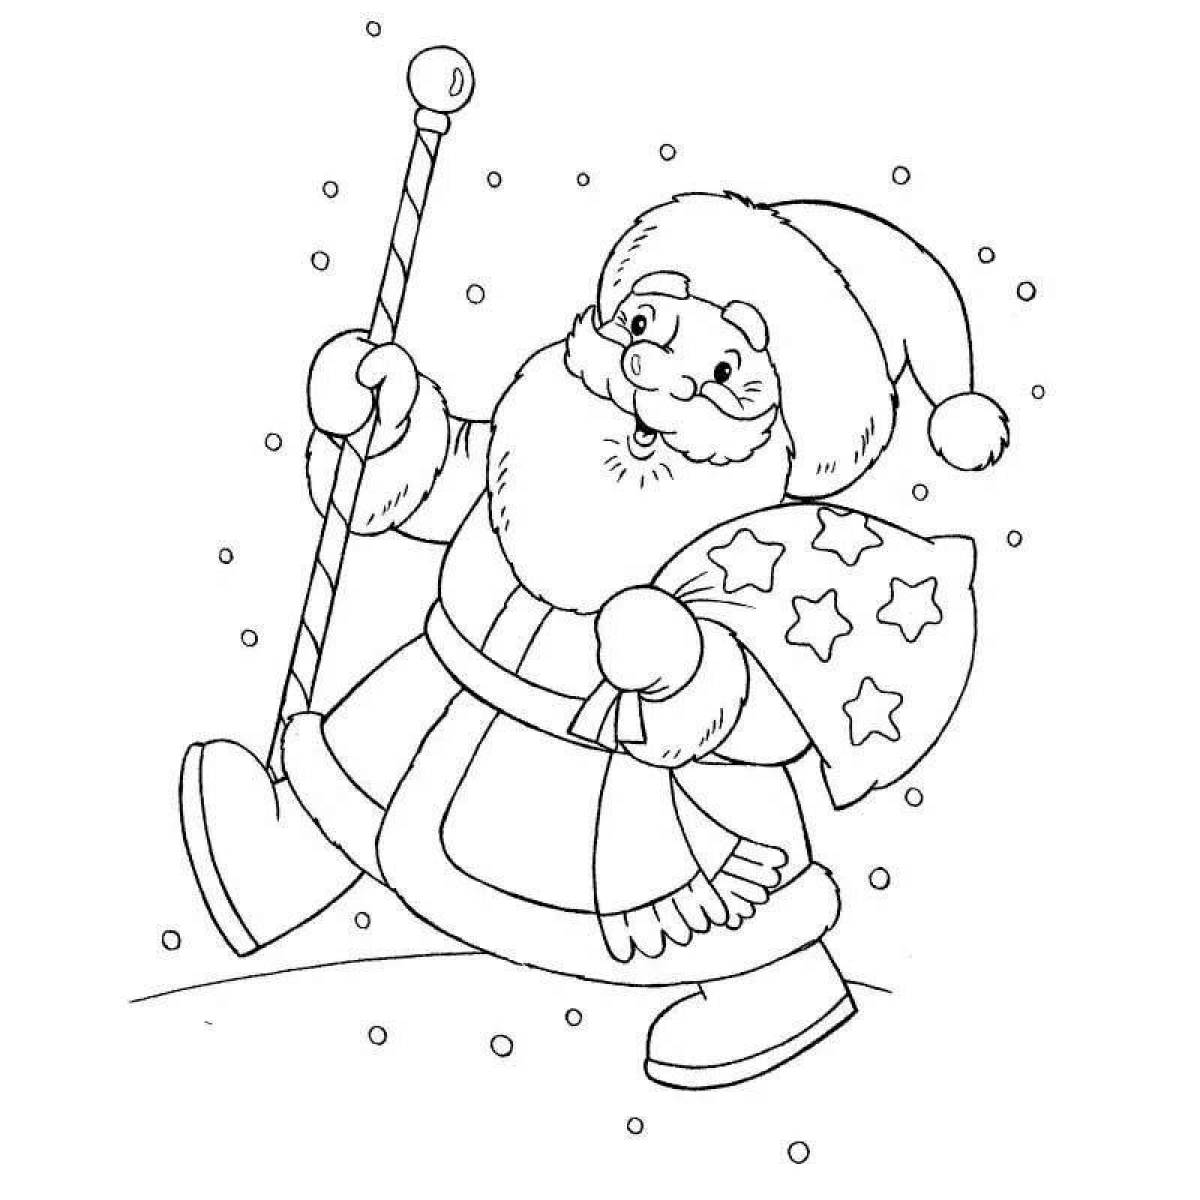 Smiling santa claus coloring page